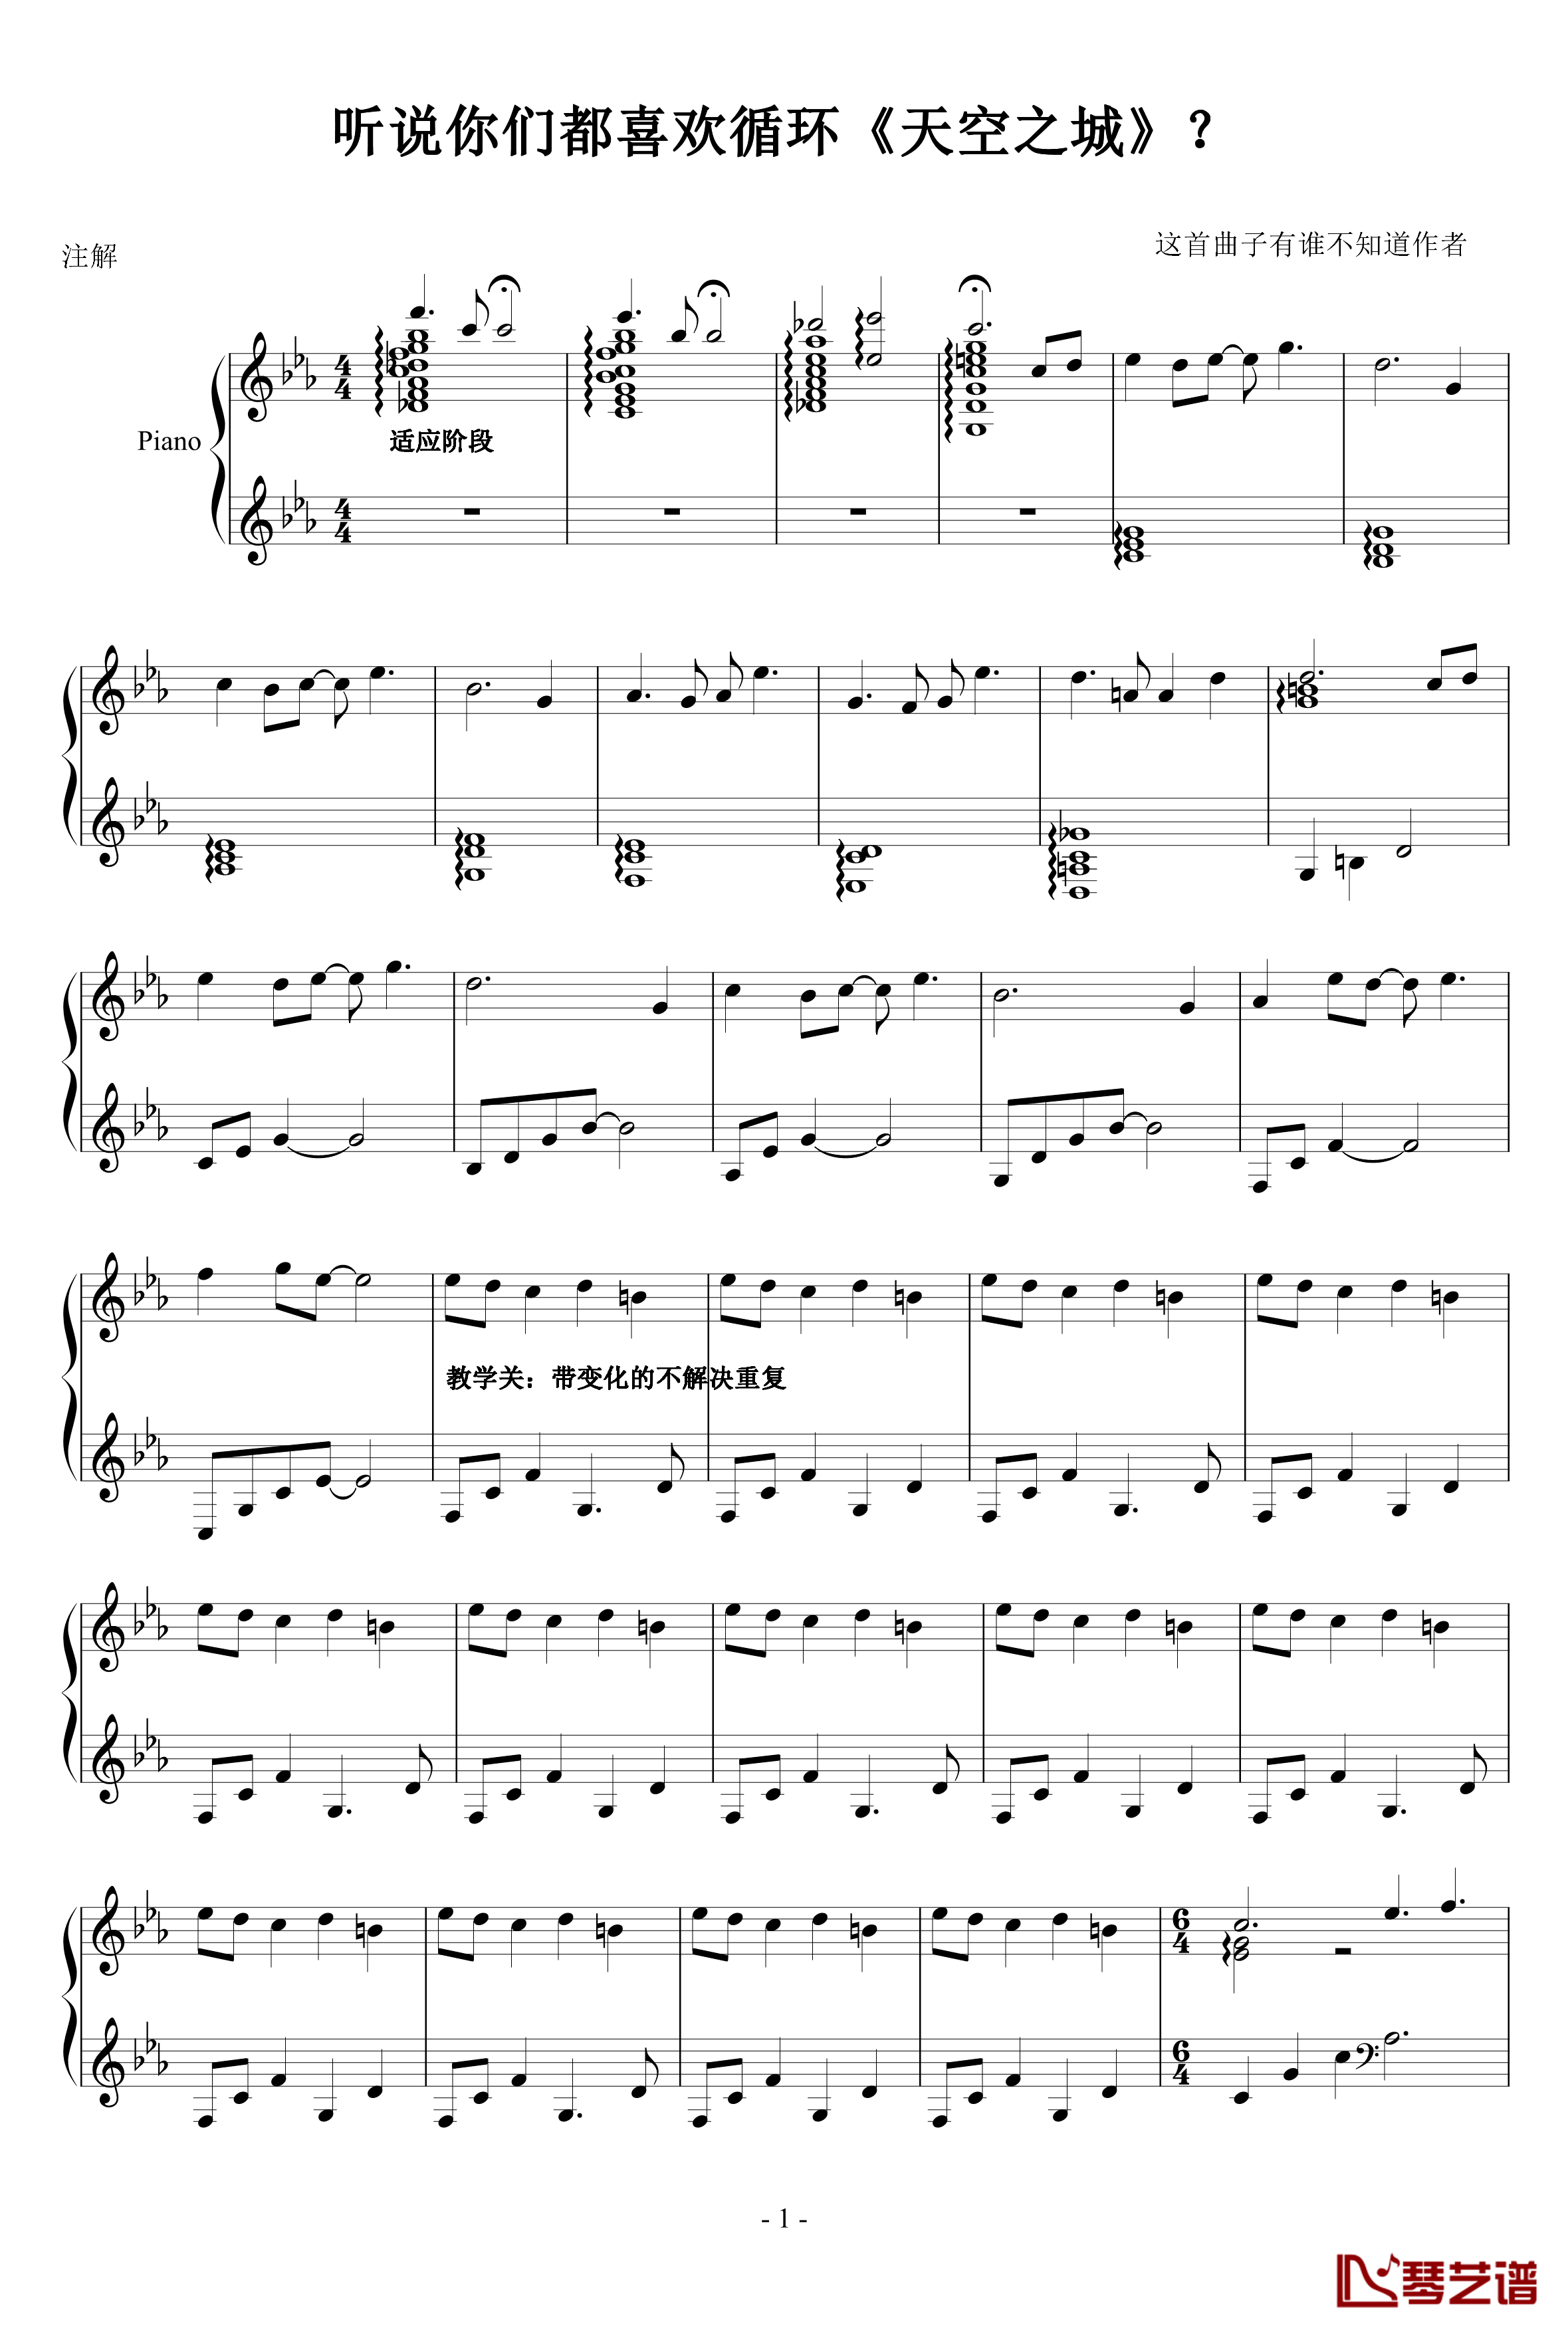 天空の钢琴谱强迫症治疗曲-kmh20081